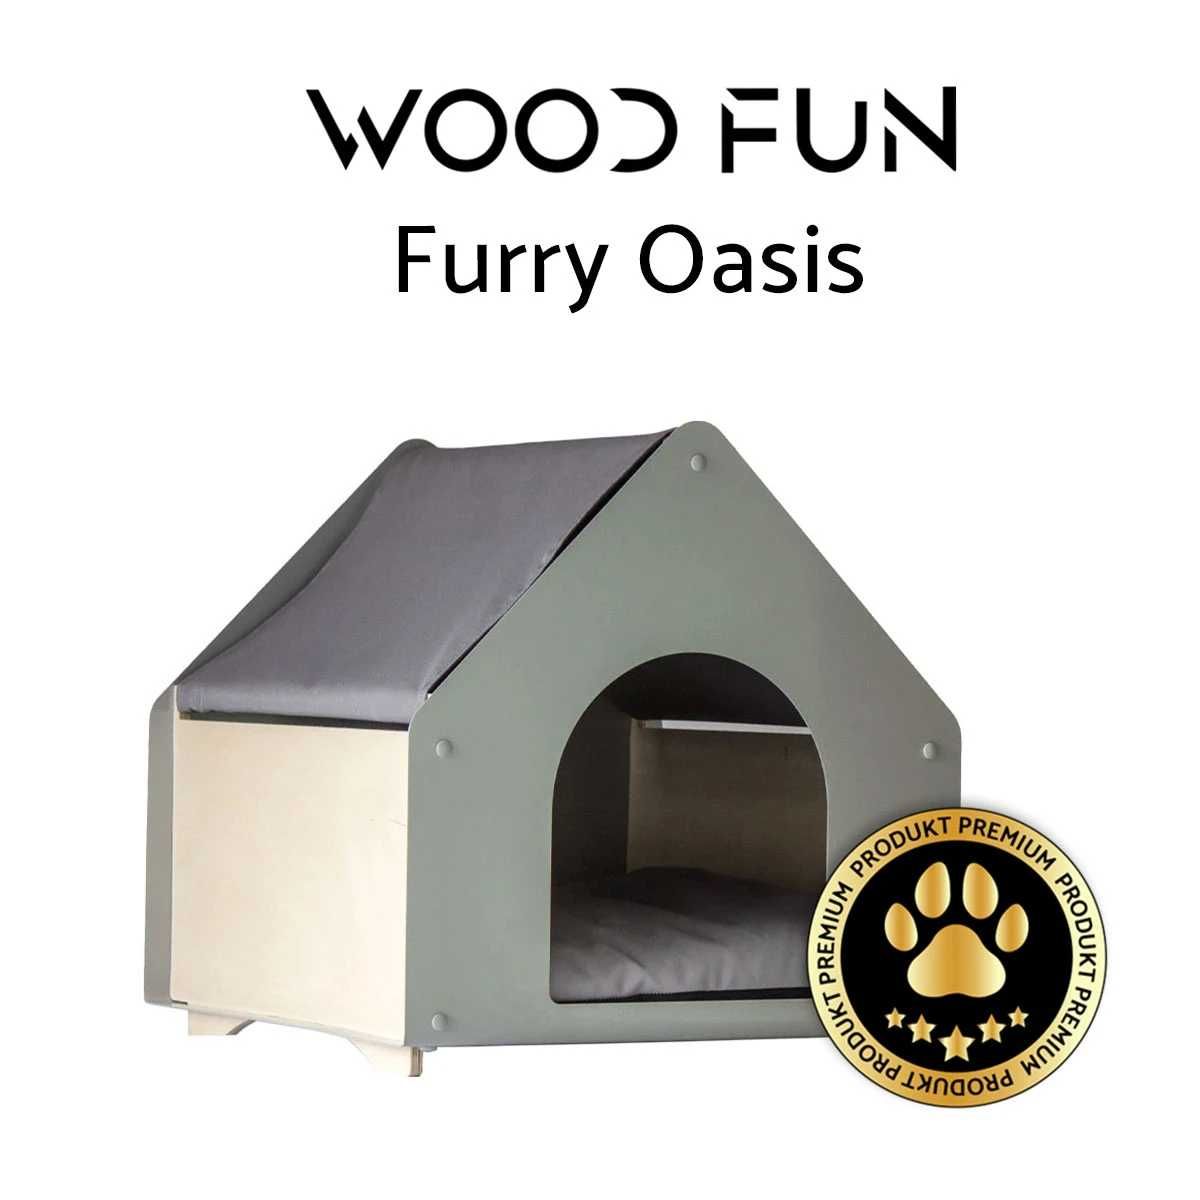 Wood Fun Furry Oasis domek legowisko dla kota, kolor szary